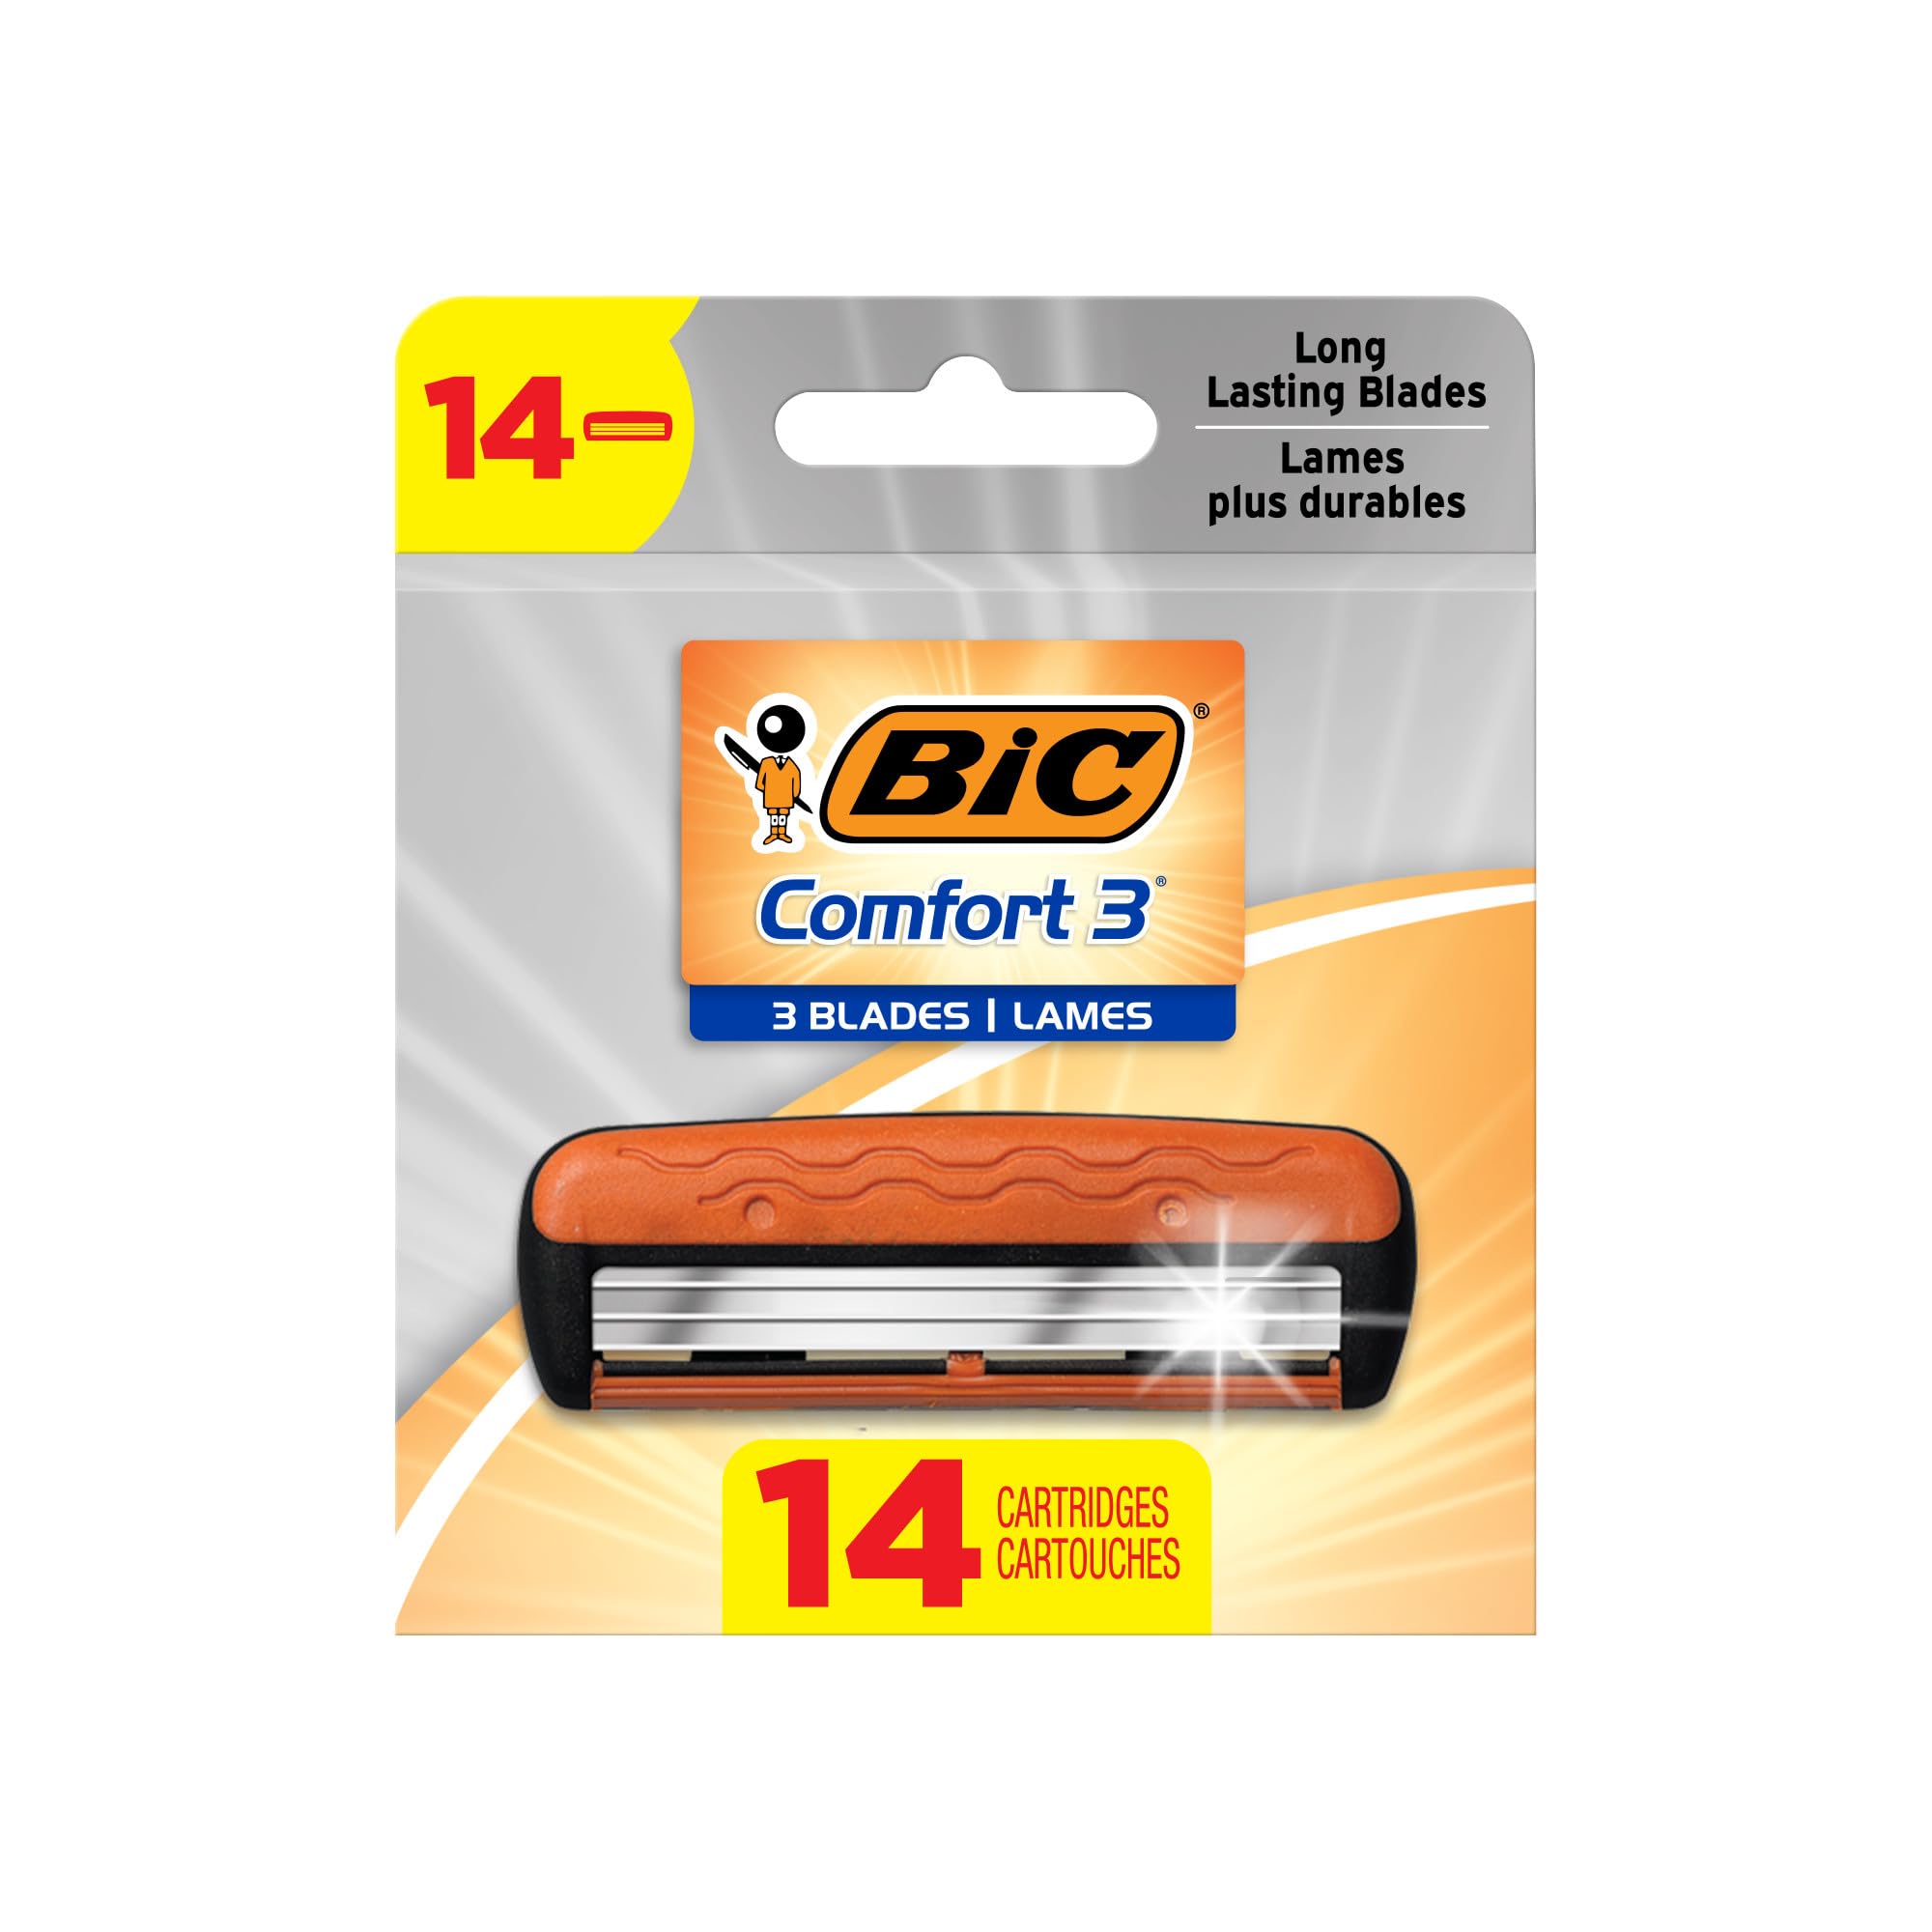 BIC Comfort 3 Refillable Refill Razor Cartridges, Three-Blade Disposable Razors for Men, Sensitive Skin Razor for a Comfortable Shave, 14 Razor Refill Cartridges